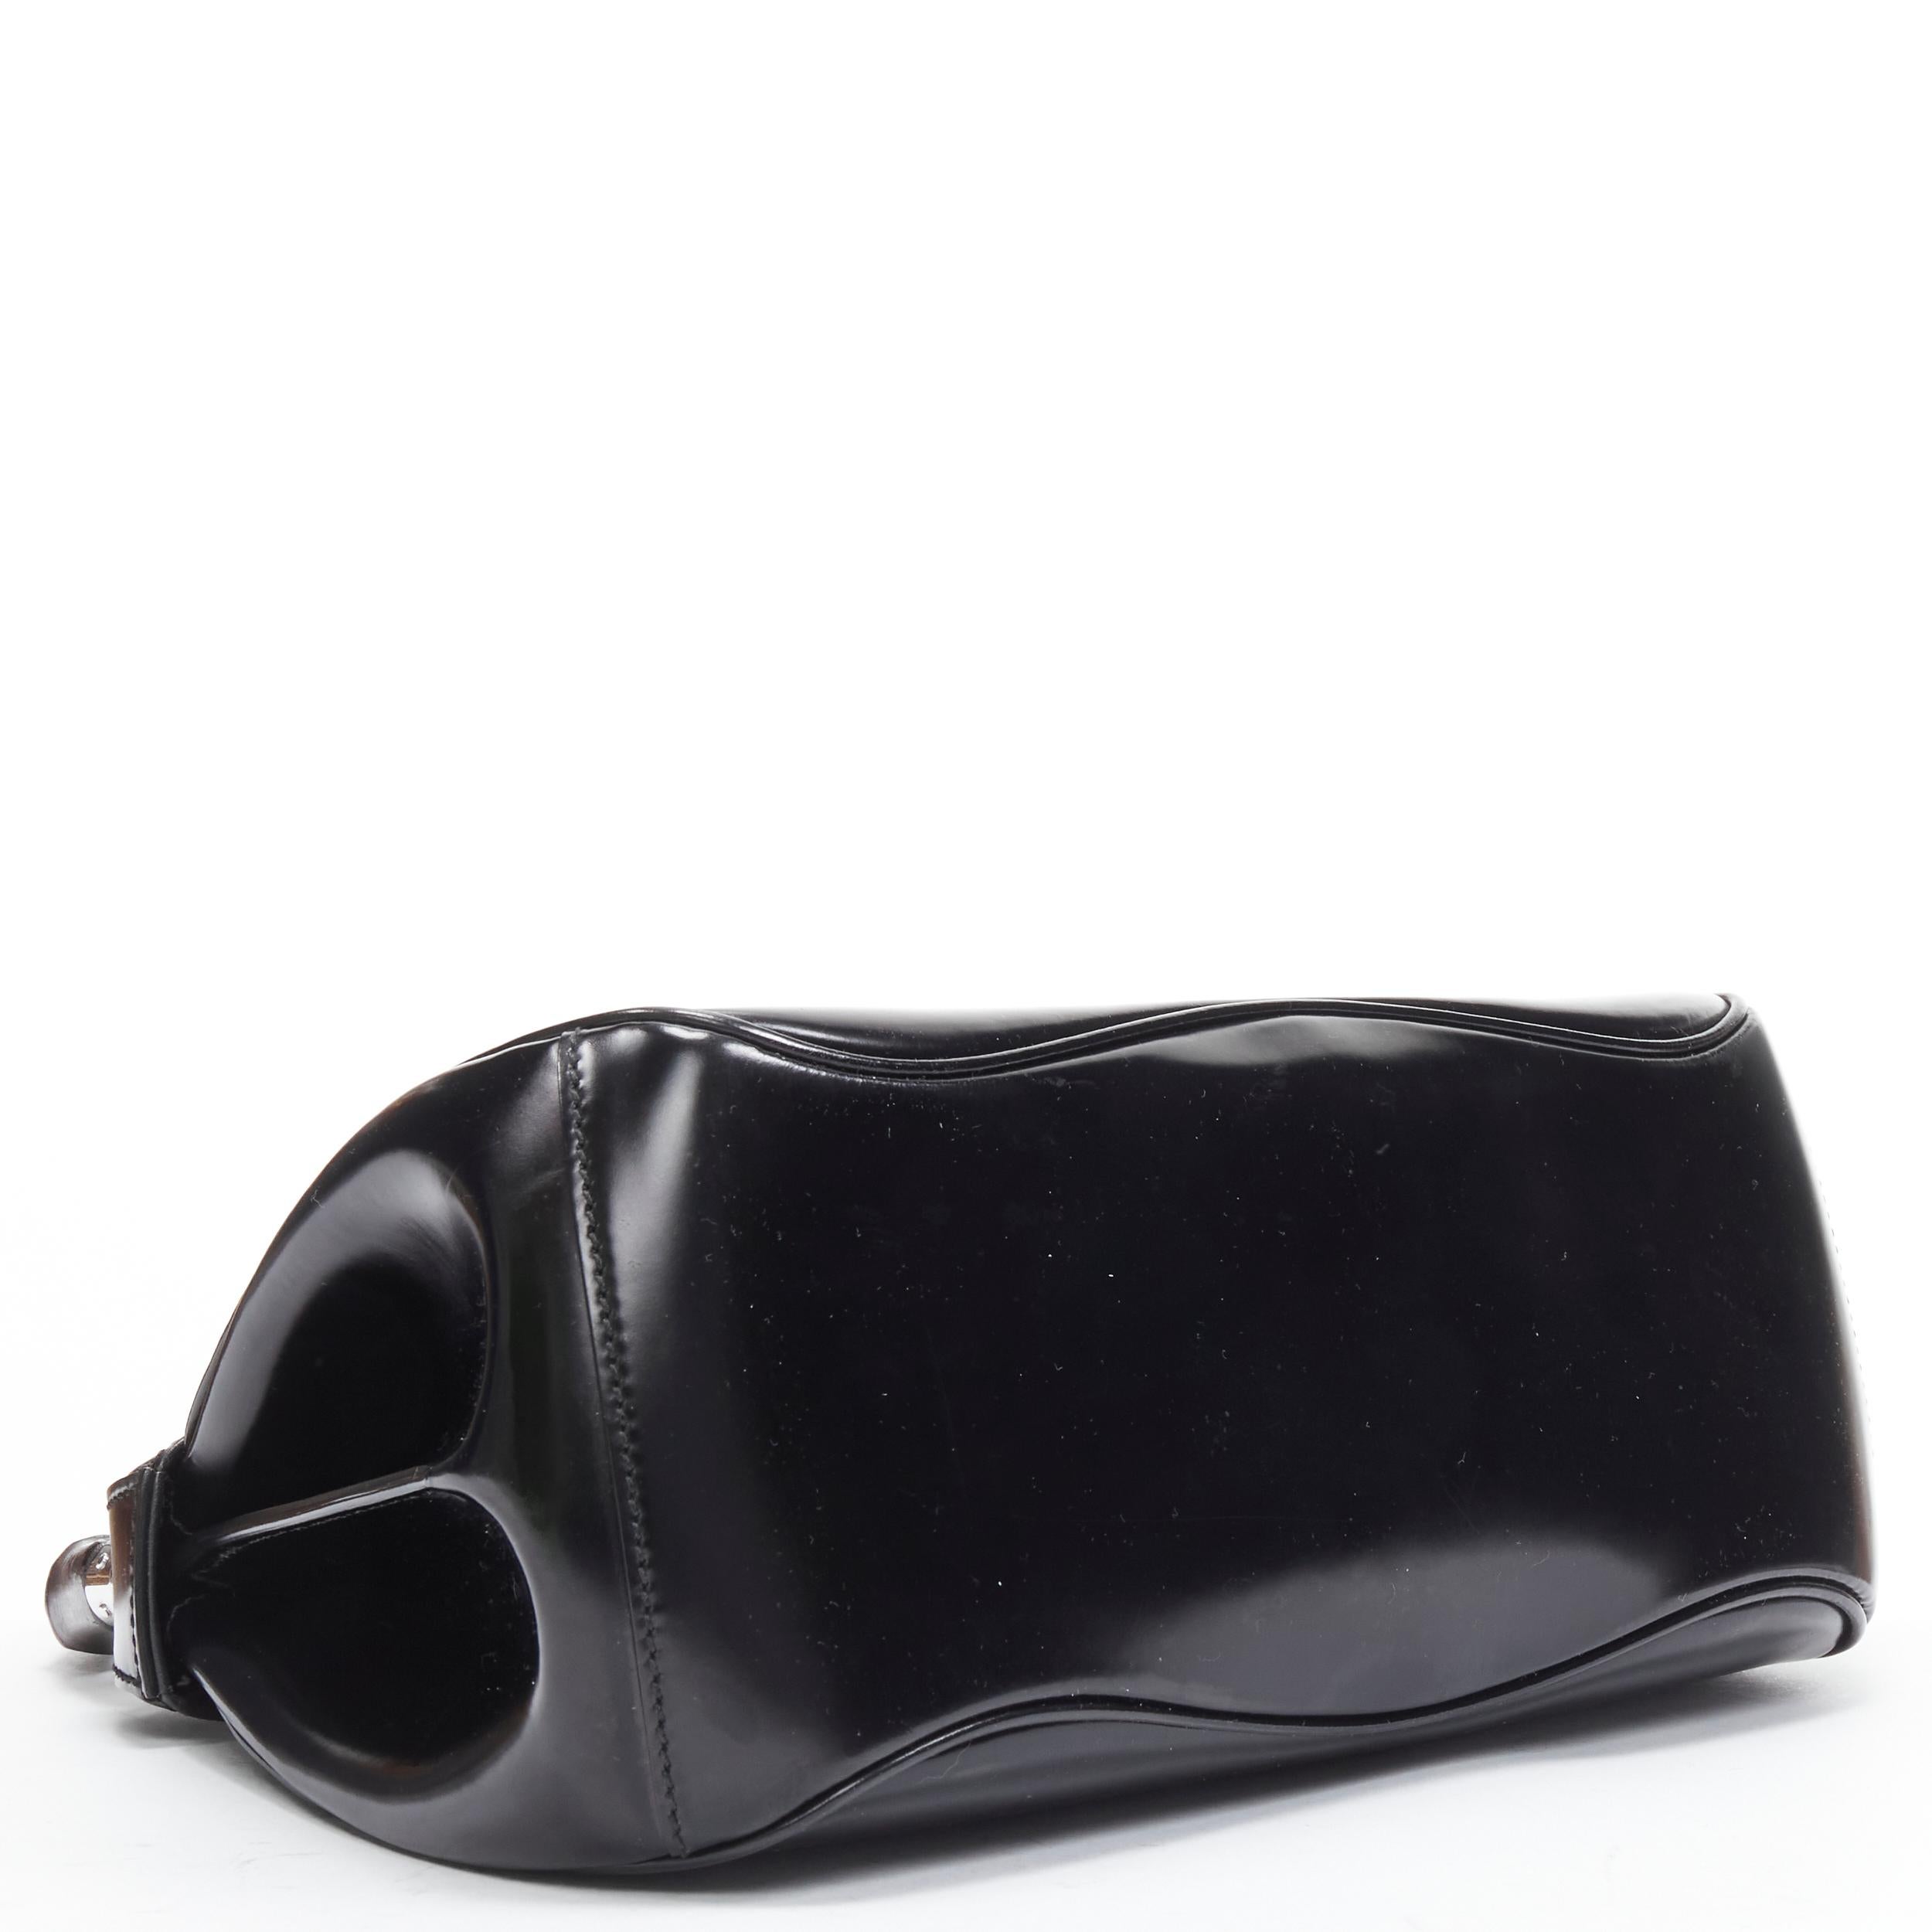 Black GUCCI Lady Lock black smooth leather Bamboo handle lock satchel bag